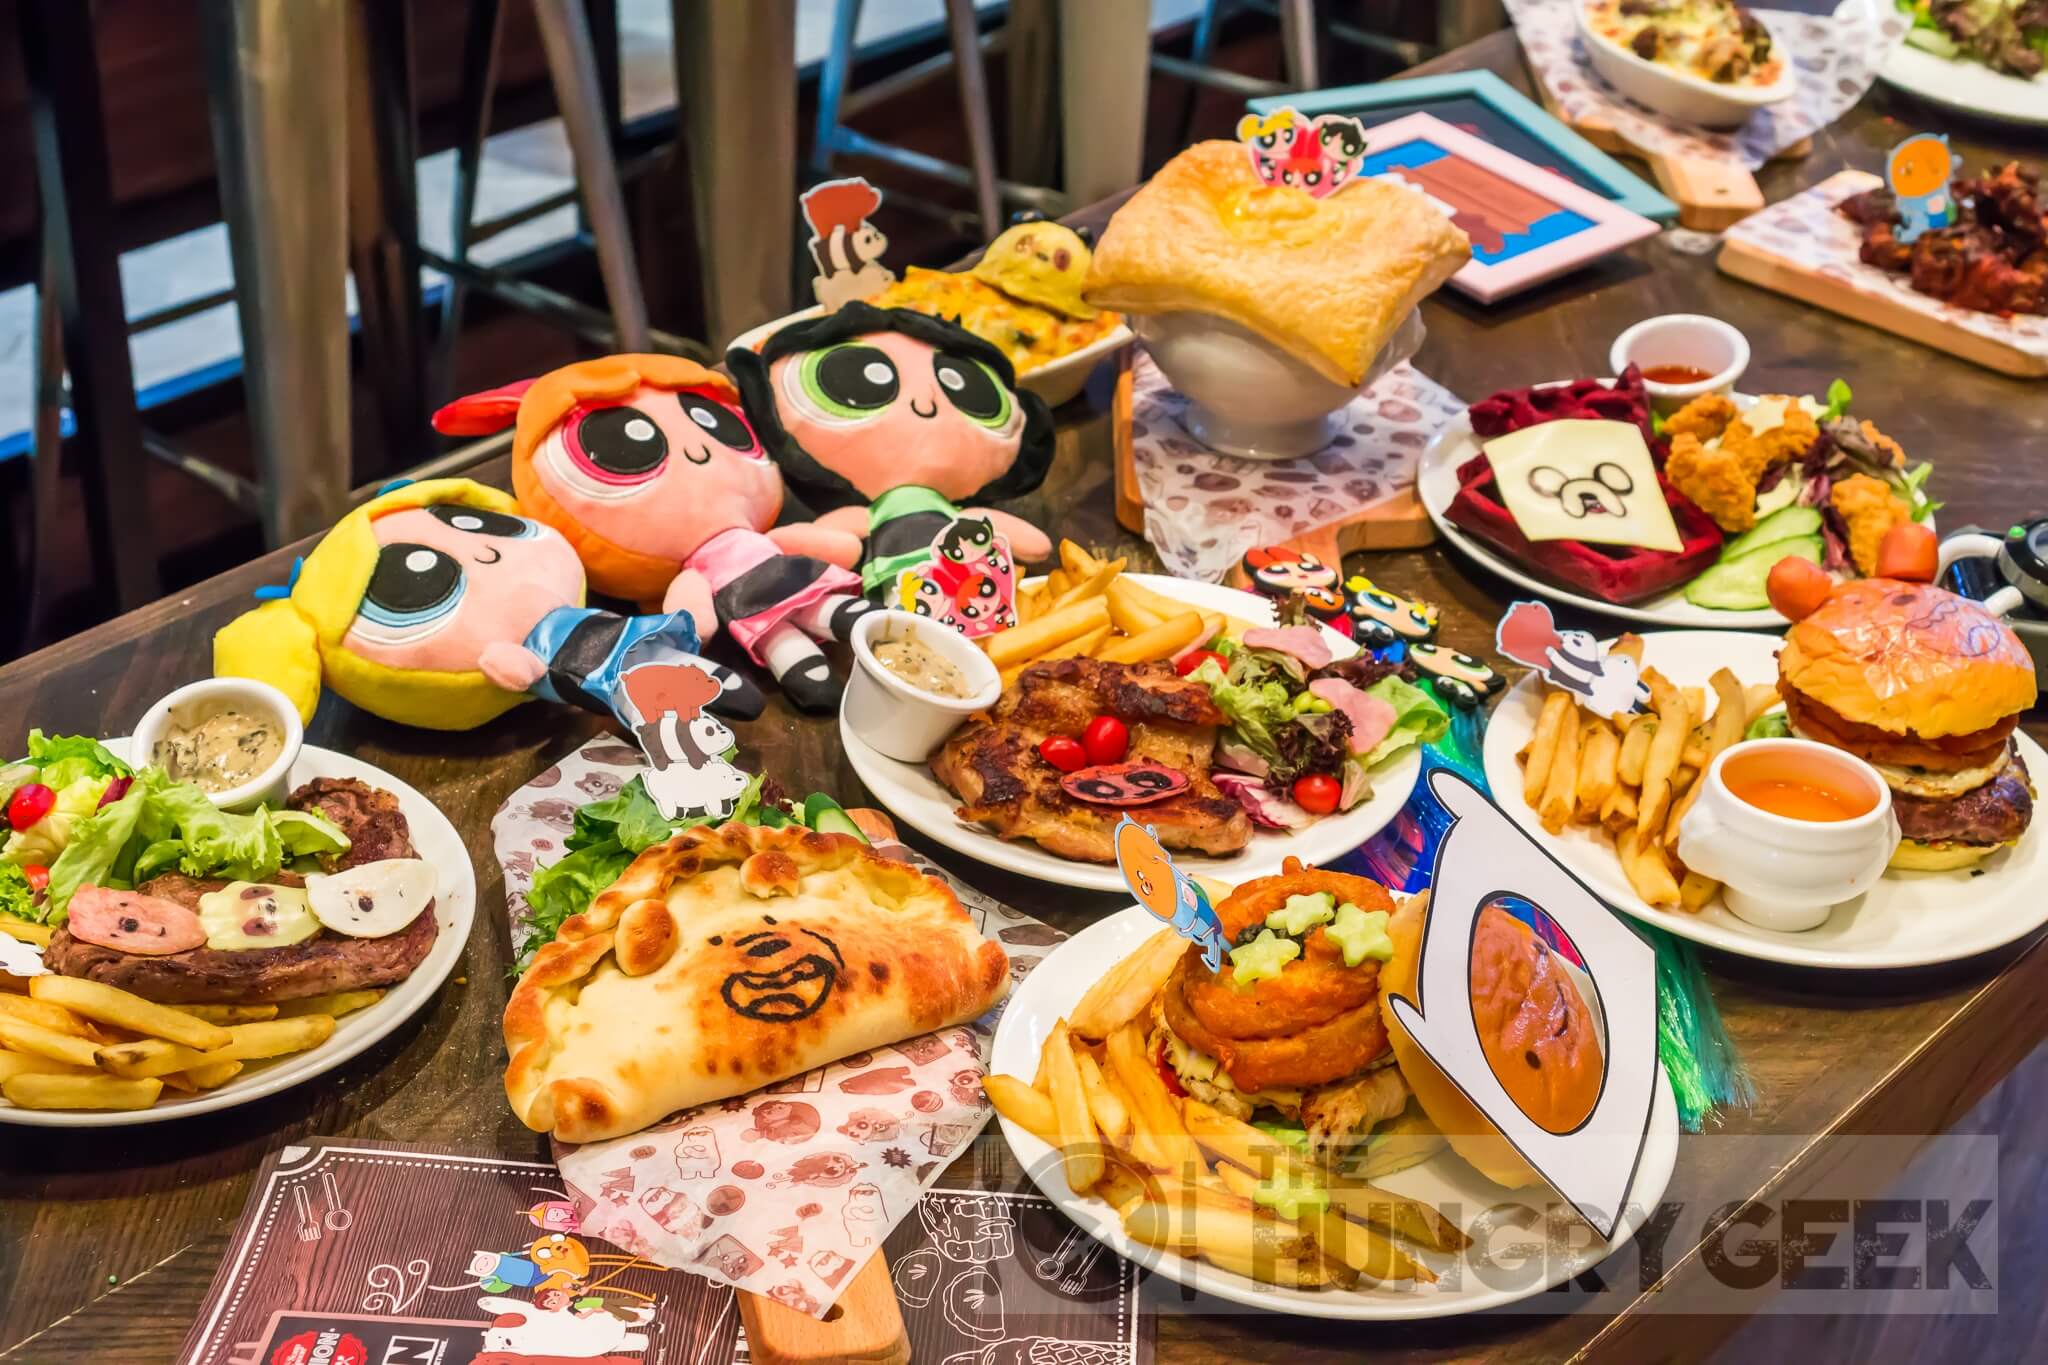 Cartoon Network Cafe - We Bare Bears, Powerpuff Girls and Great Food! - The  Hungry Geek